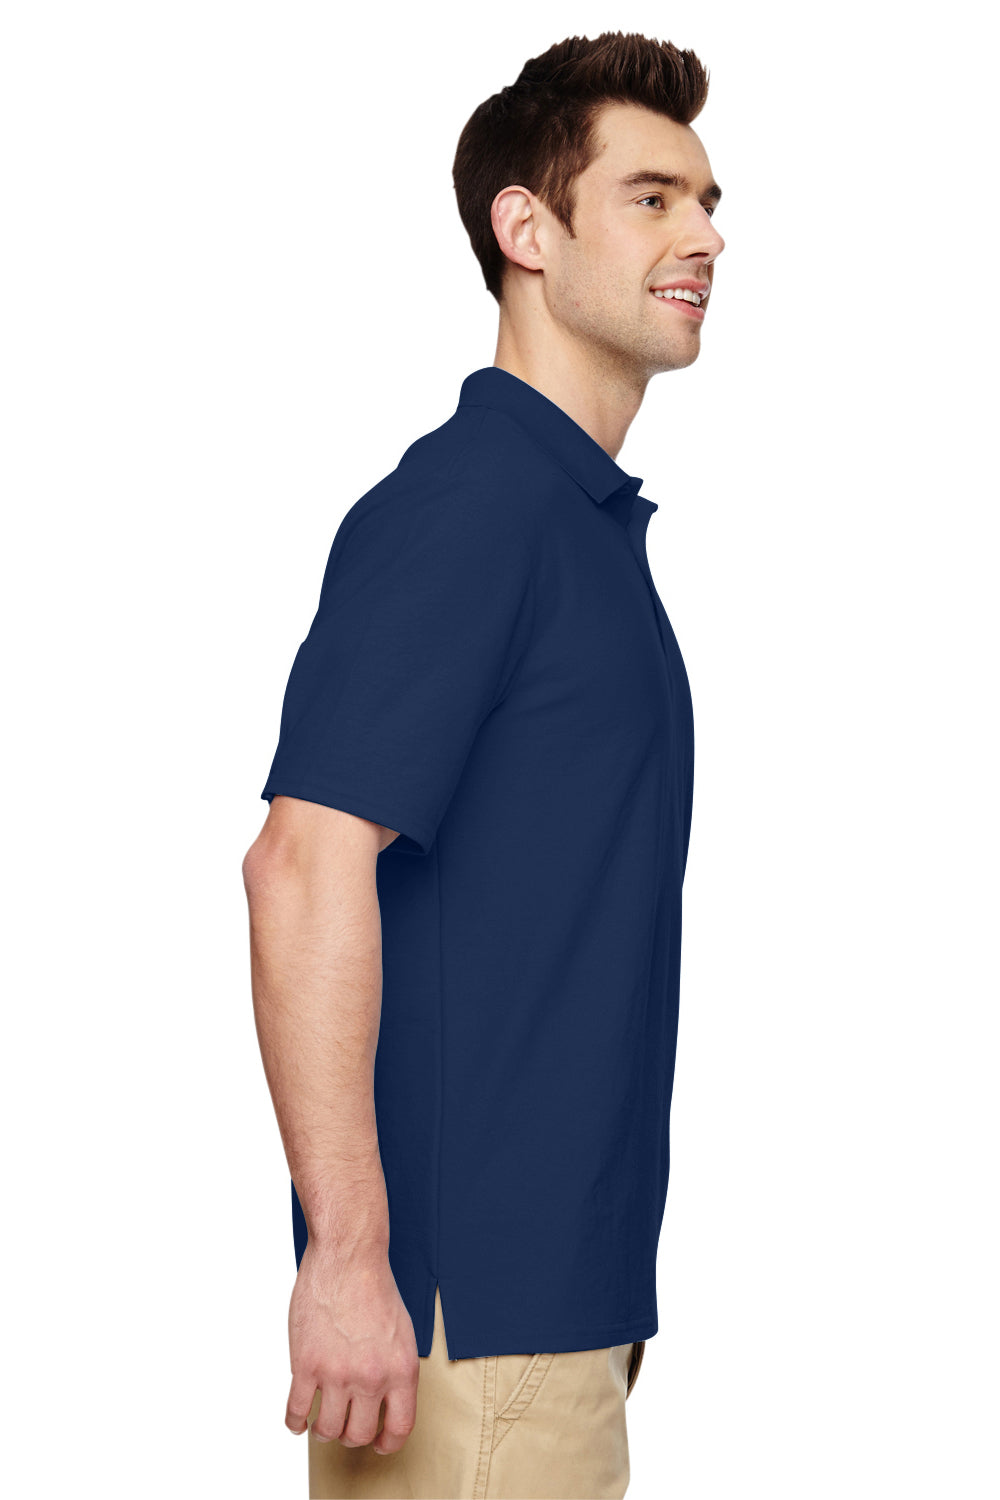 Gildan G728 Mens DryBlend Moisture Wicking Short Sleeve Polo Shirt Navy Blue Side